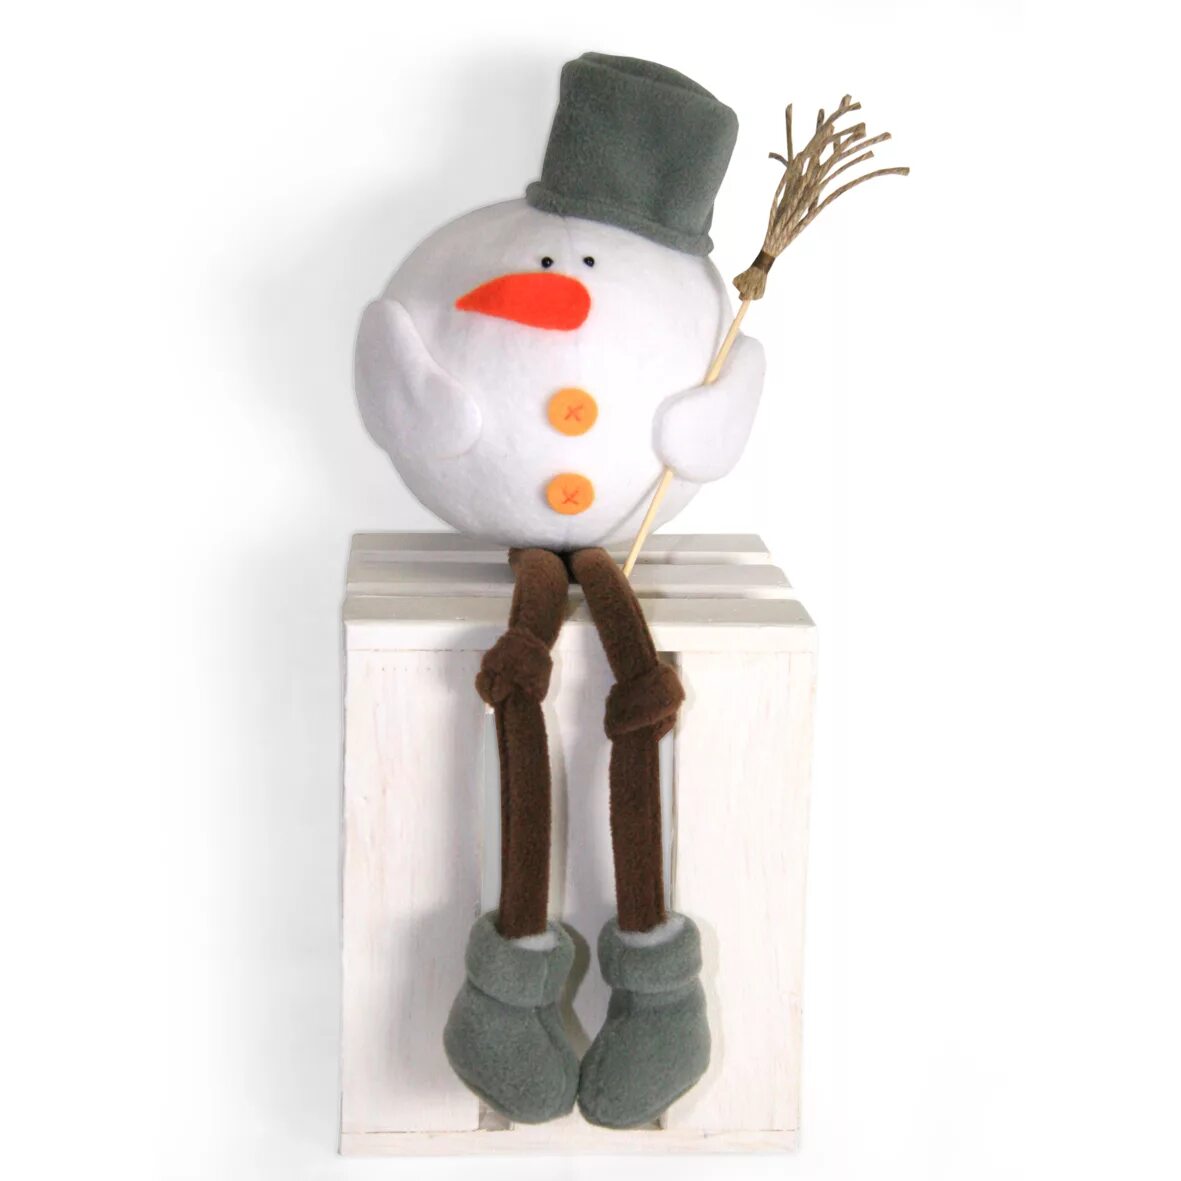 Шар снеговик. Снеговик в интерьере. Игрушка Новогодняя "Снеговик". Снеговик игрушка на ножка. Снеговик интерьерный.